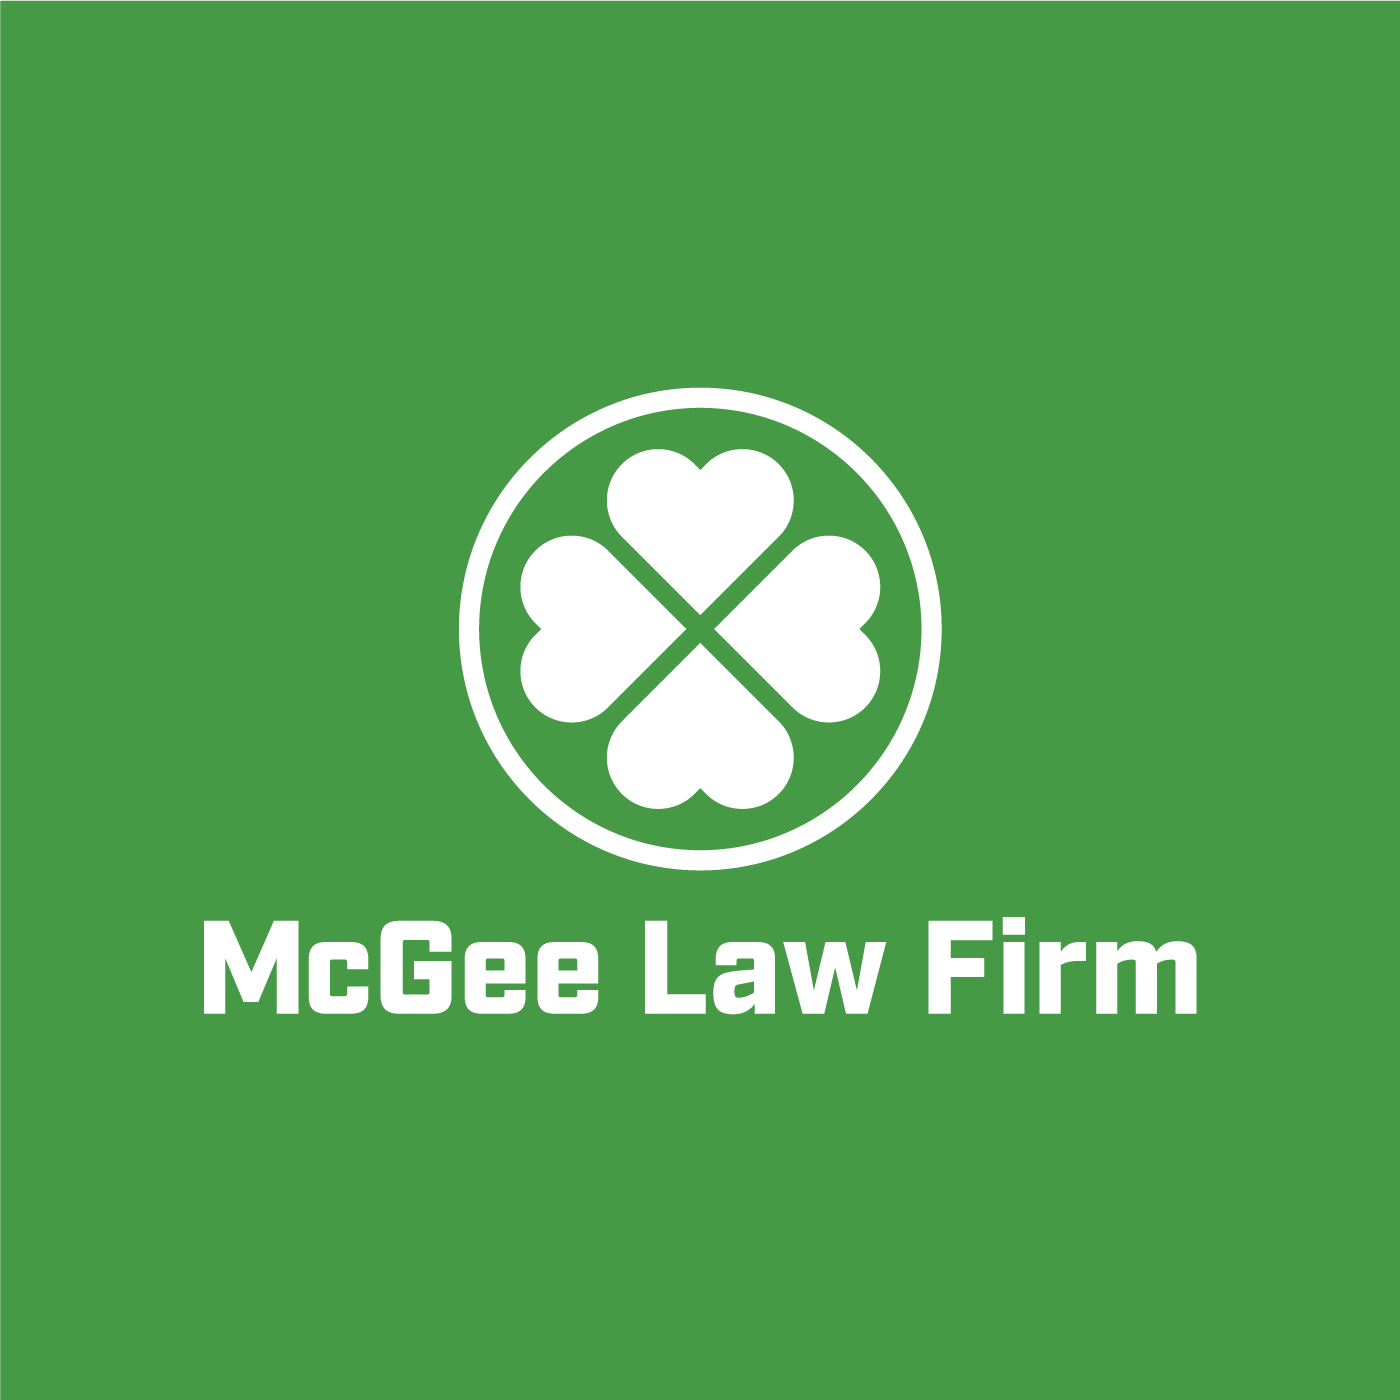 brand Digital Advertising law firm lawyer legal advertising legal marketing Web Design 